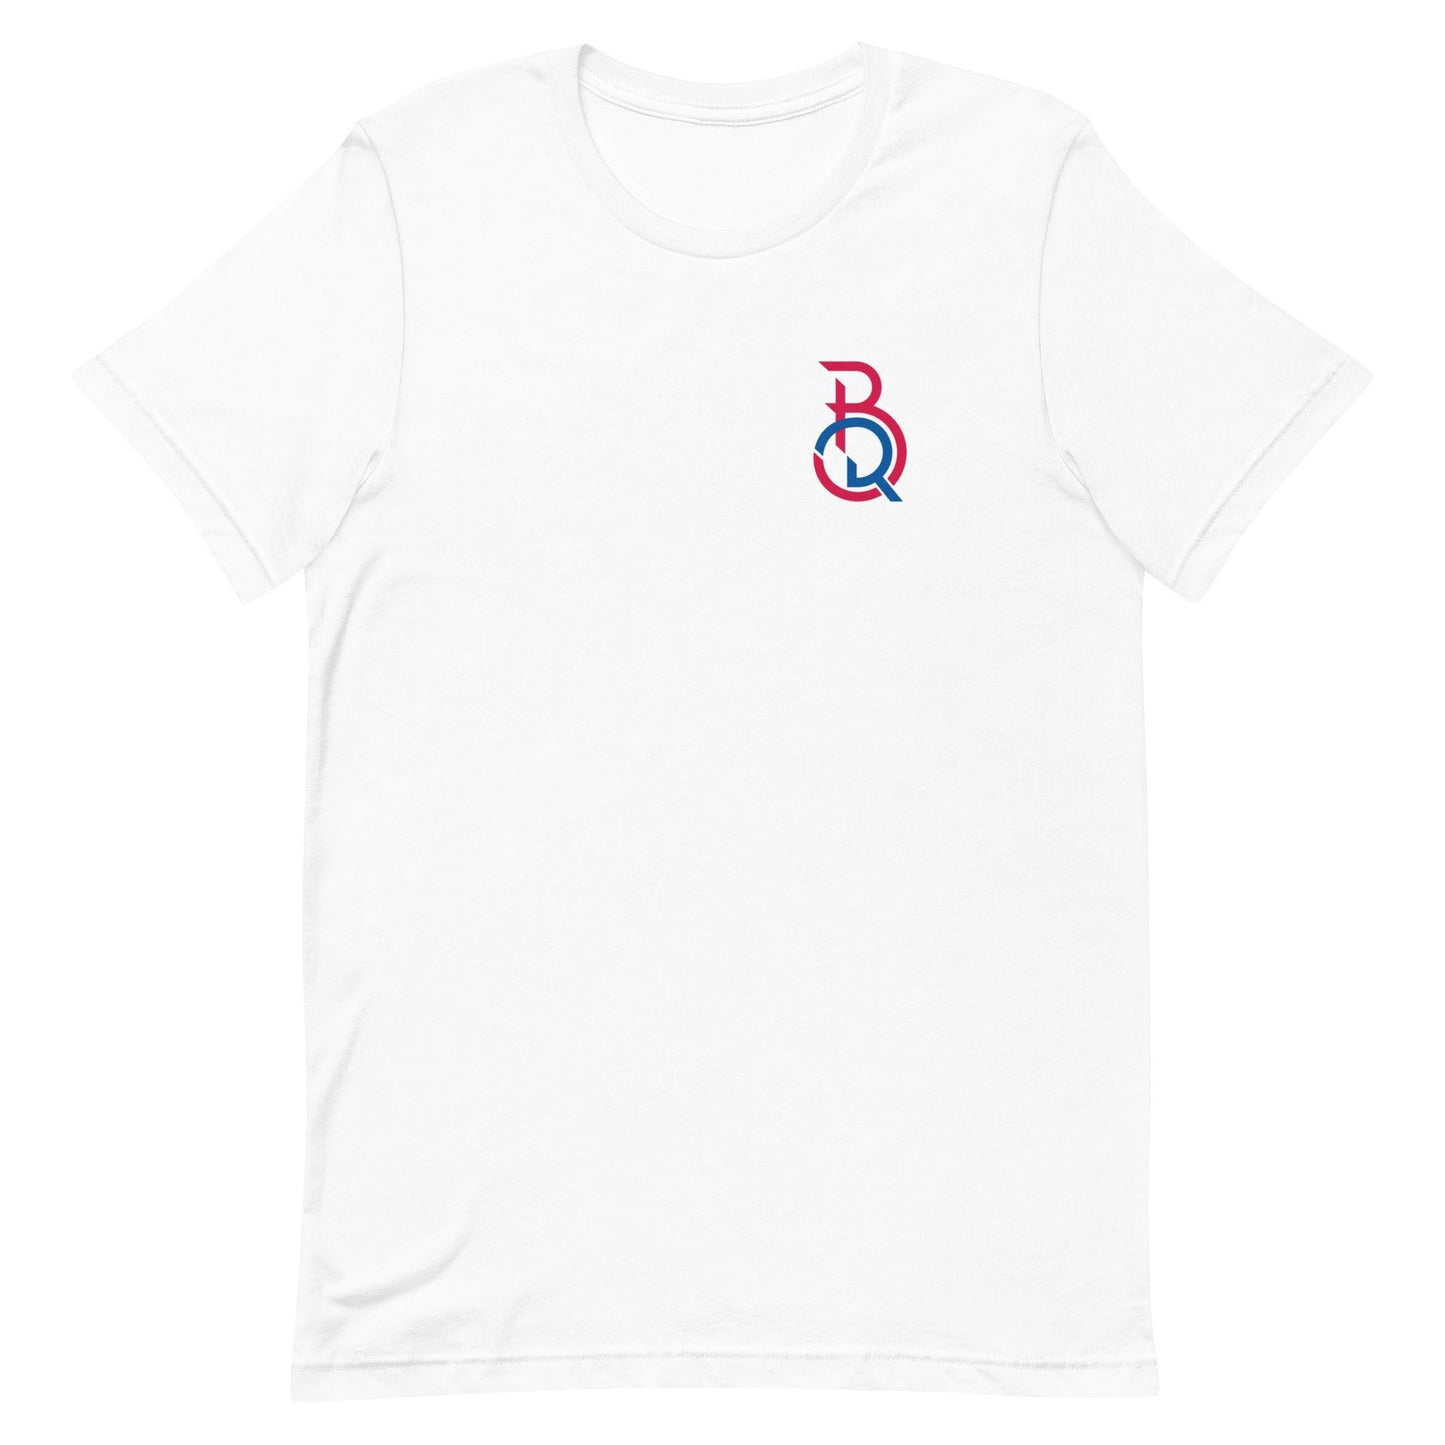 Baron Radcliff “Signature” t-shirt - Fan Arch